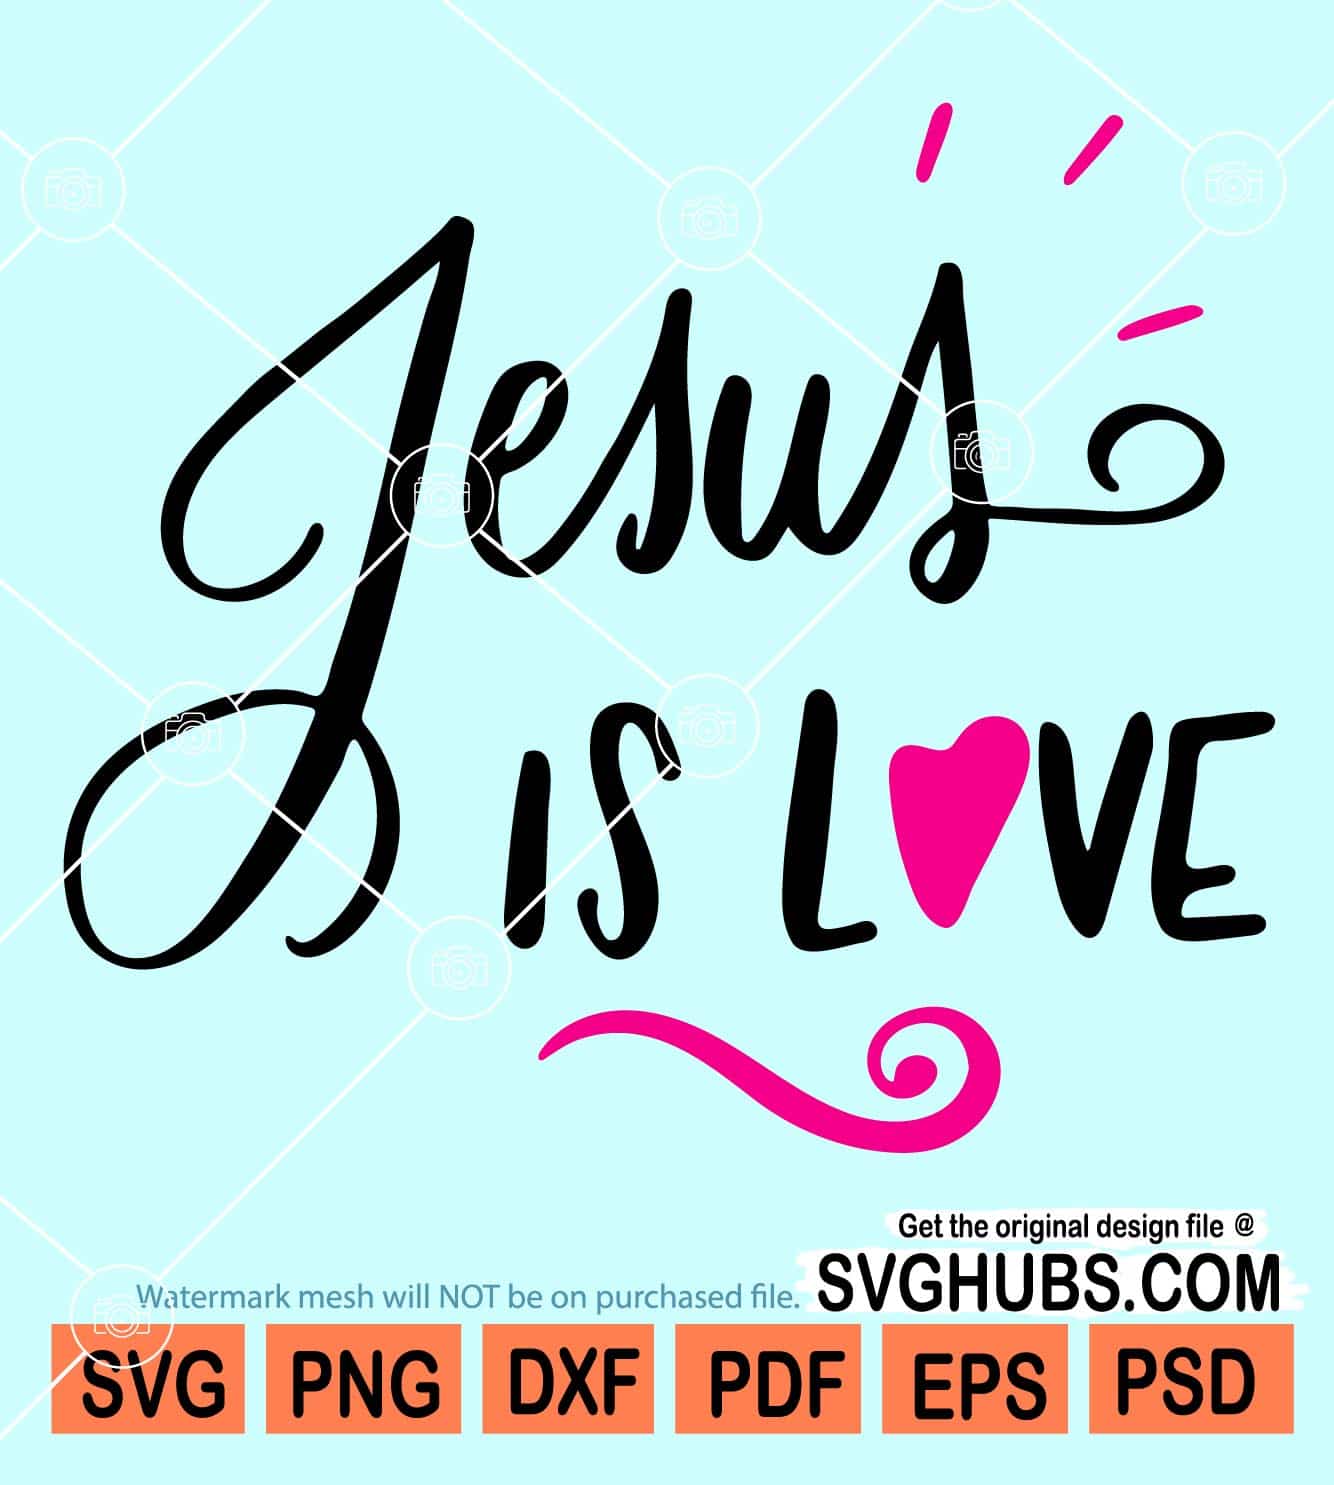 Jesus is love svg